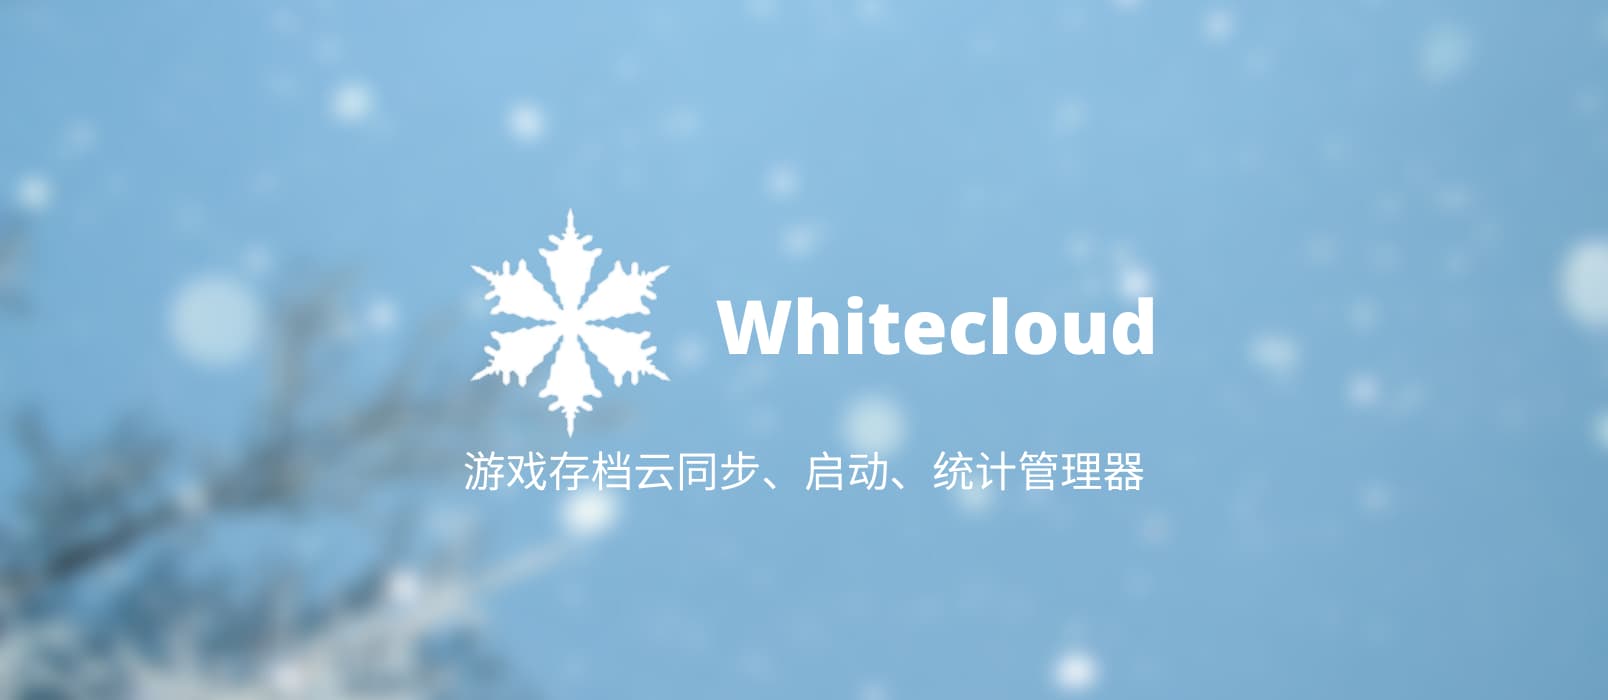 Whitecloud - 本地游戏存档管理器：存档云同步、启动、攻略、时间统计[Windows] 1